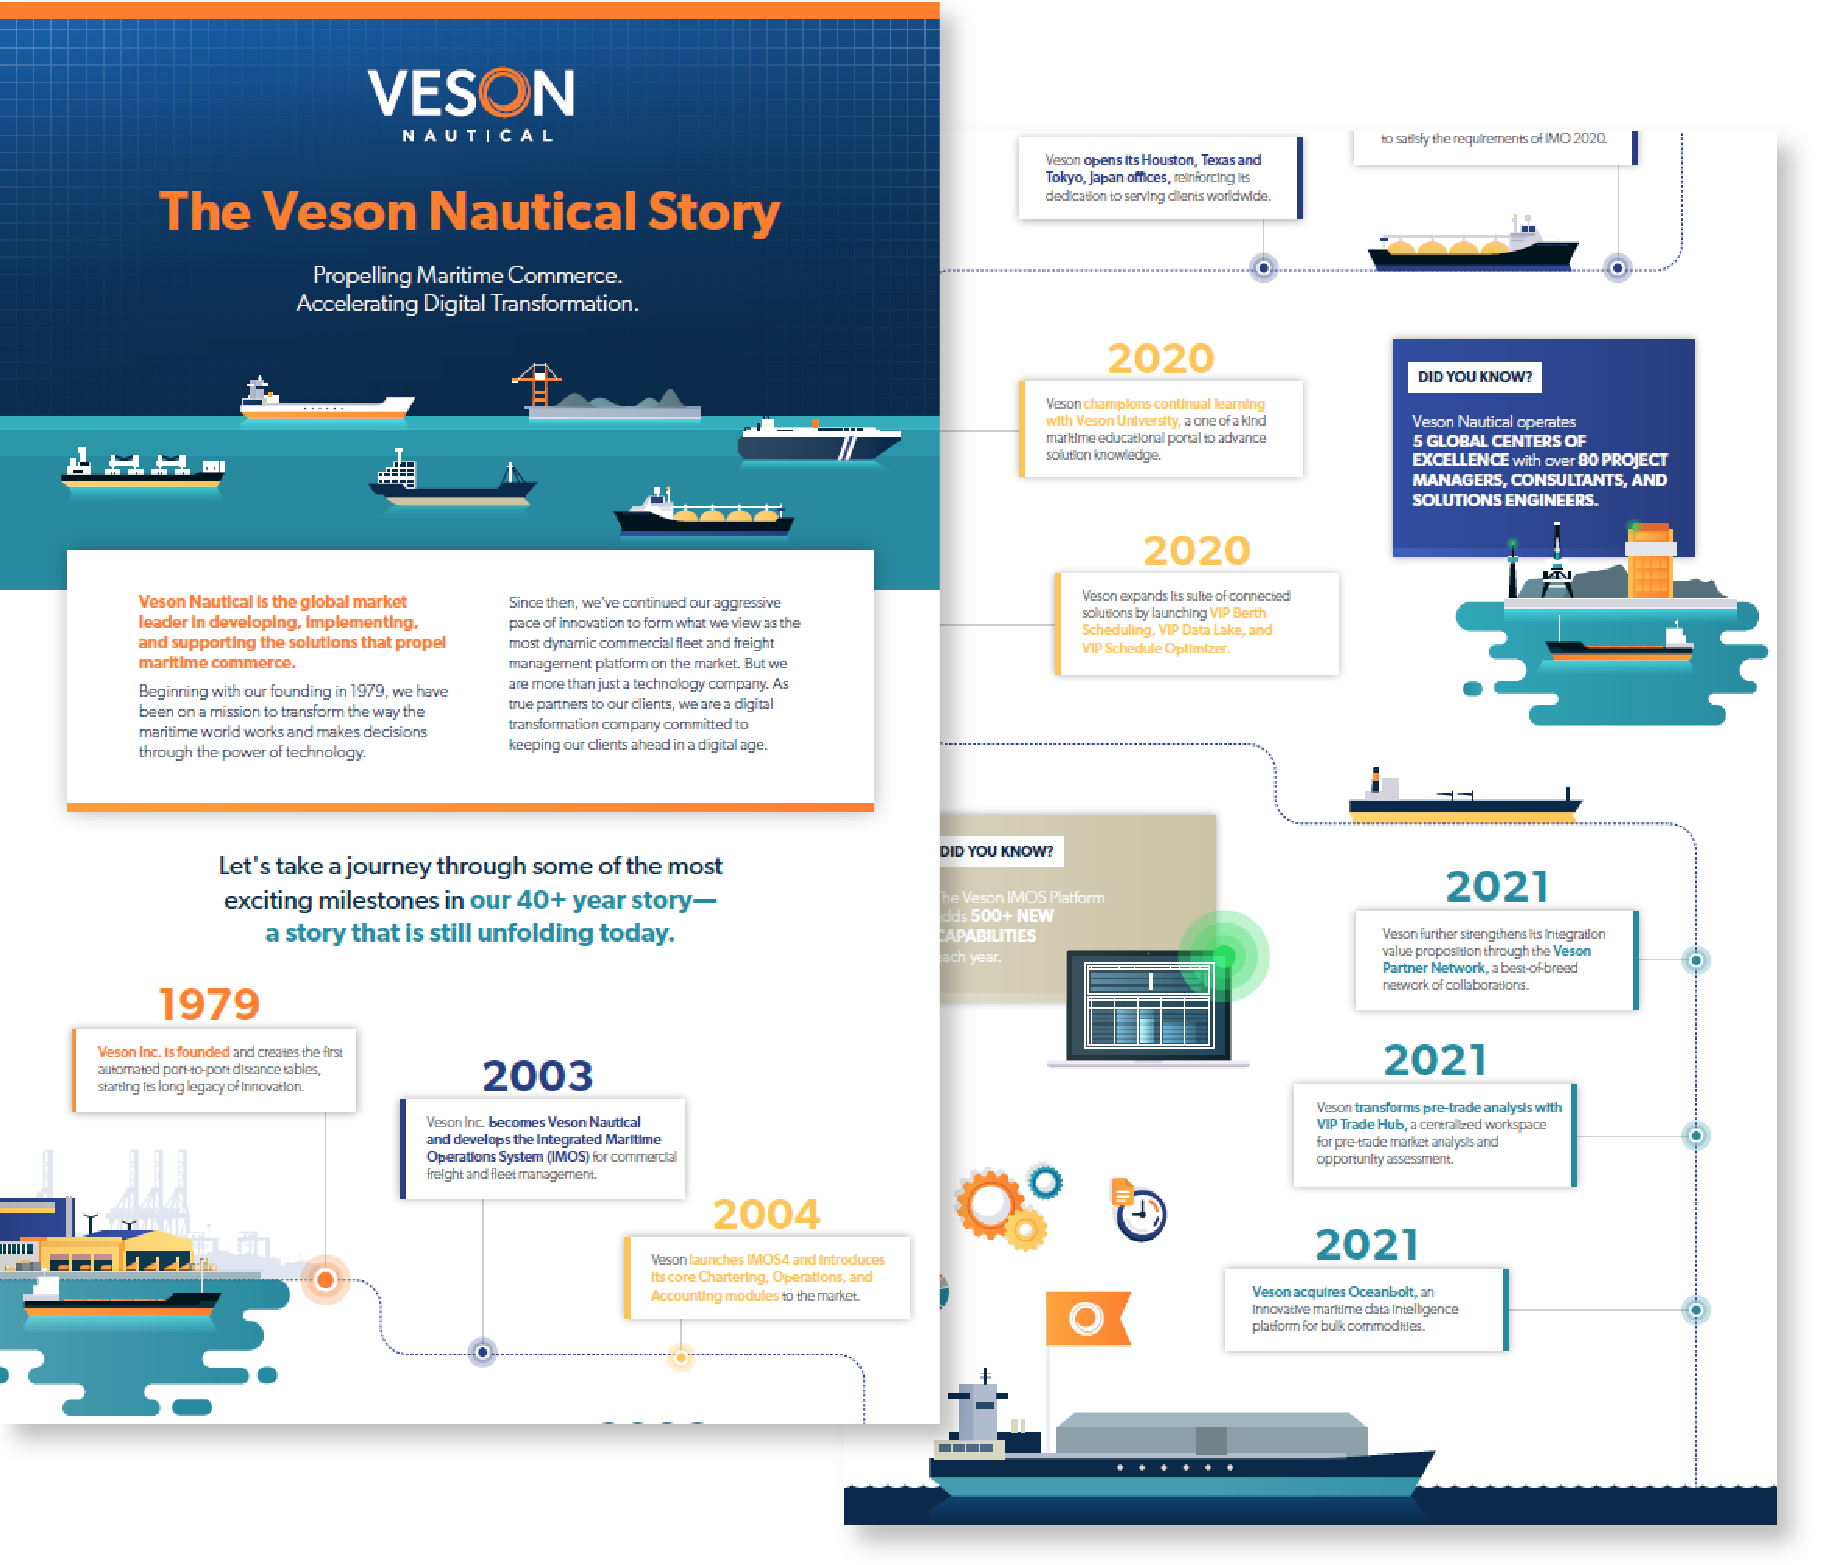 Veson’s Innovation Timeline Infographic